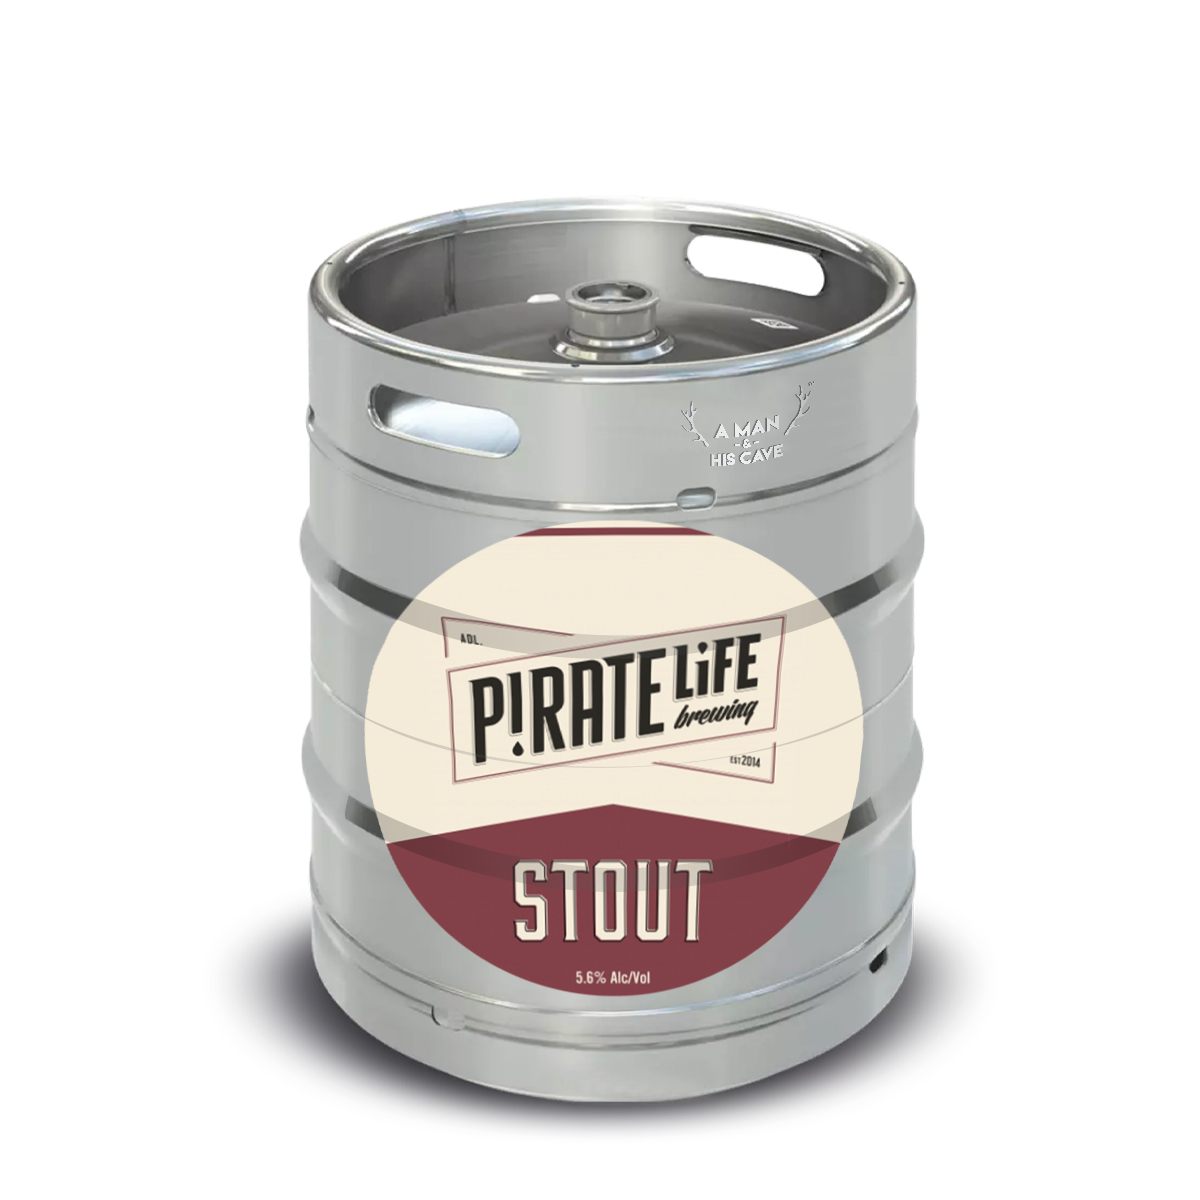 Beer Keg - Pirate Life Stout 50lt Commercial Keg 5.6% D-Type Coupler [NSW]